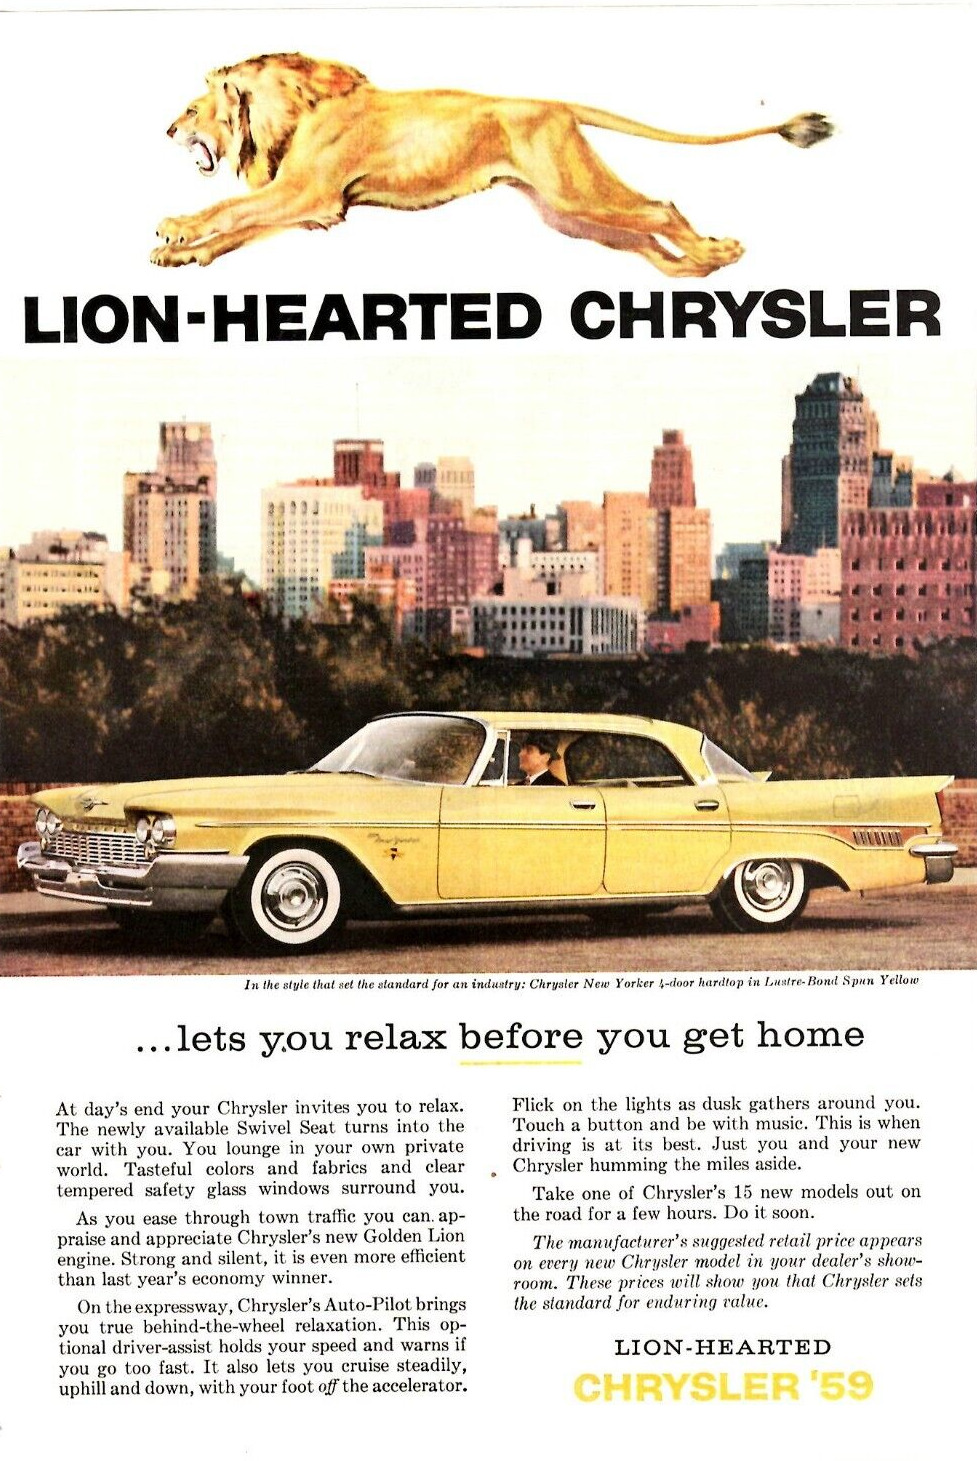 1959 Print Ad Chrysler New Yorker 4-door hardtop in Lustre-Bond Spun Yellow Lion